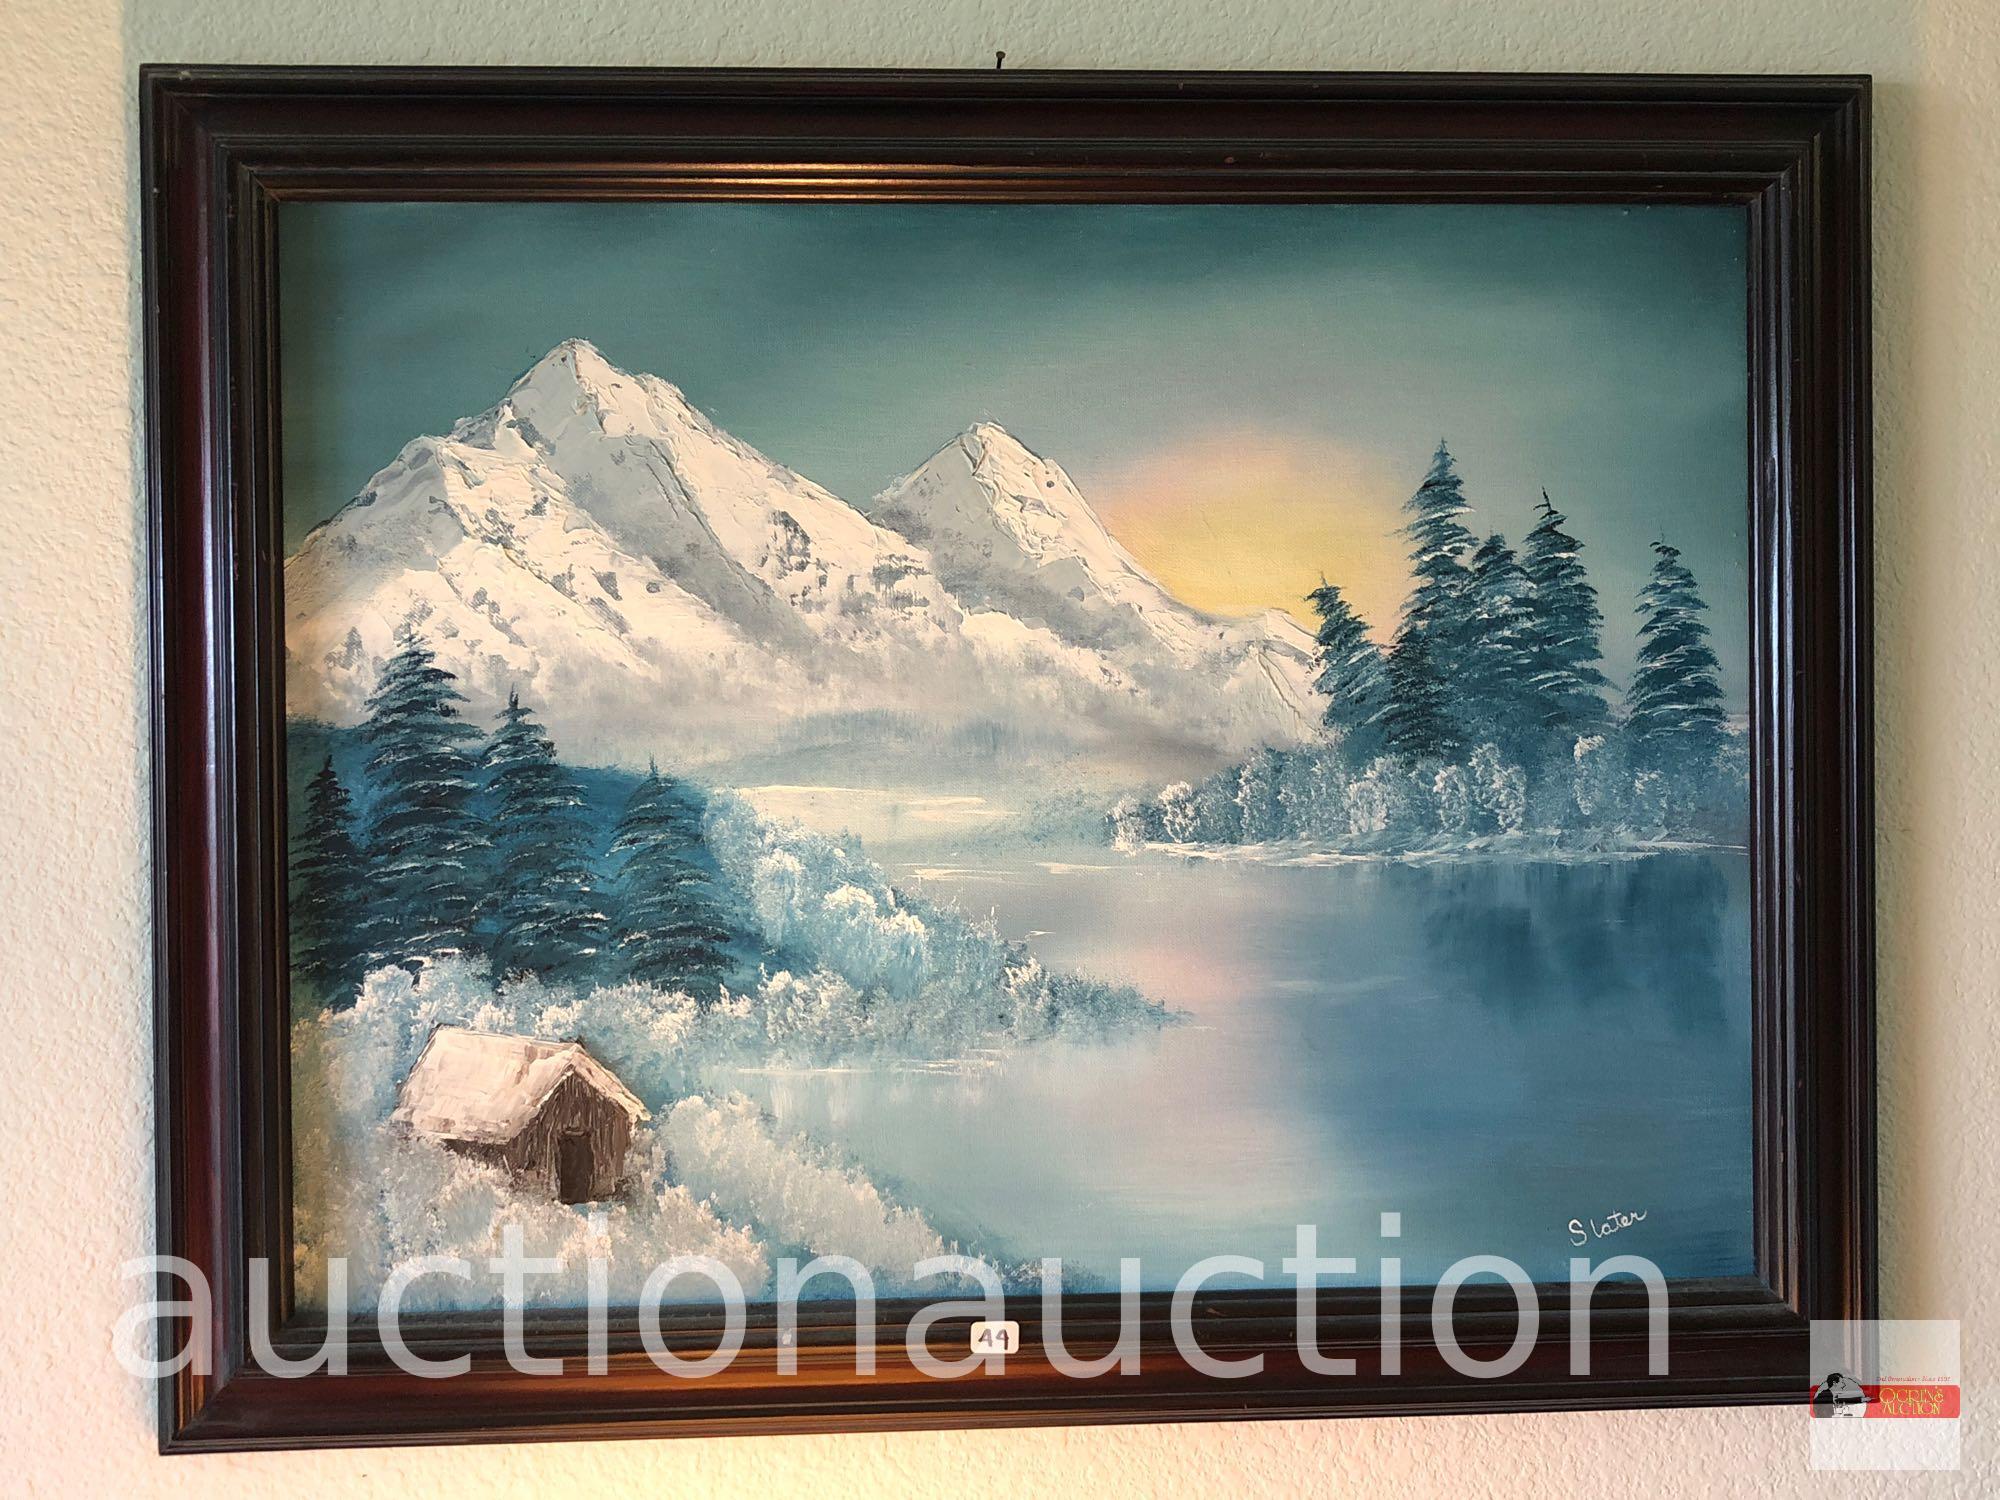 Artwork - Oil painting, winter landscape by Slater, wood framed, 28"wx22"hx1.5"d